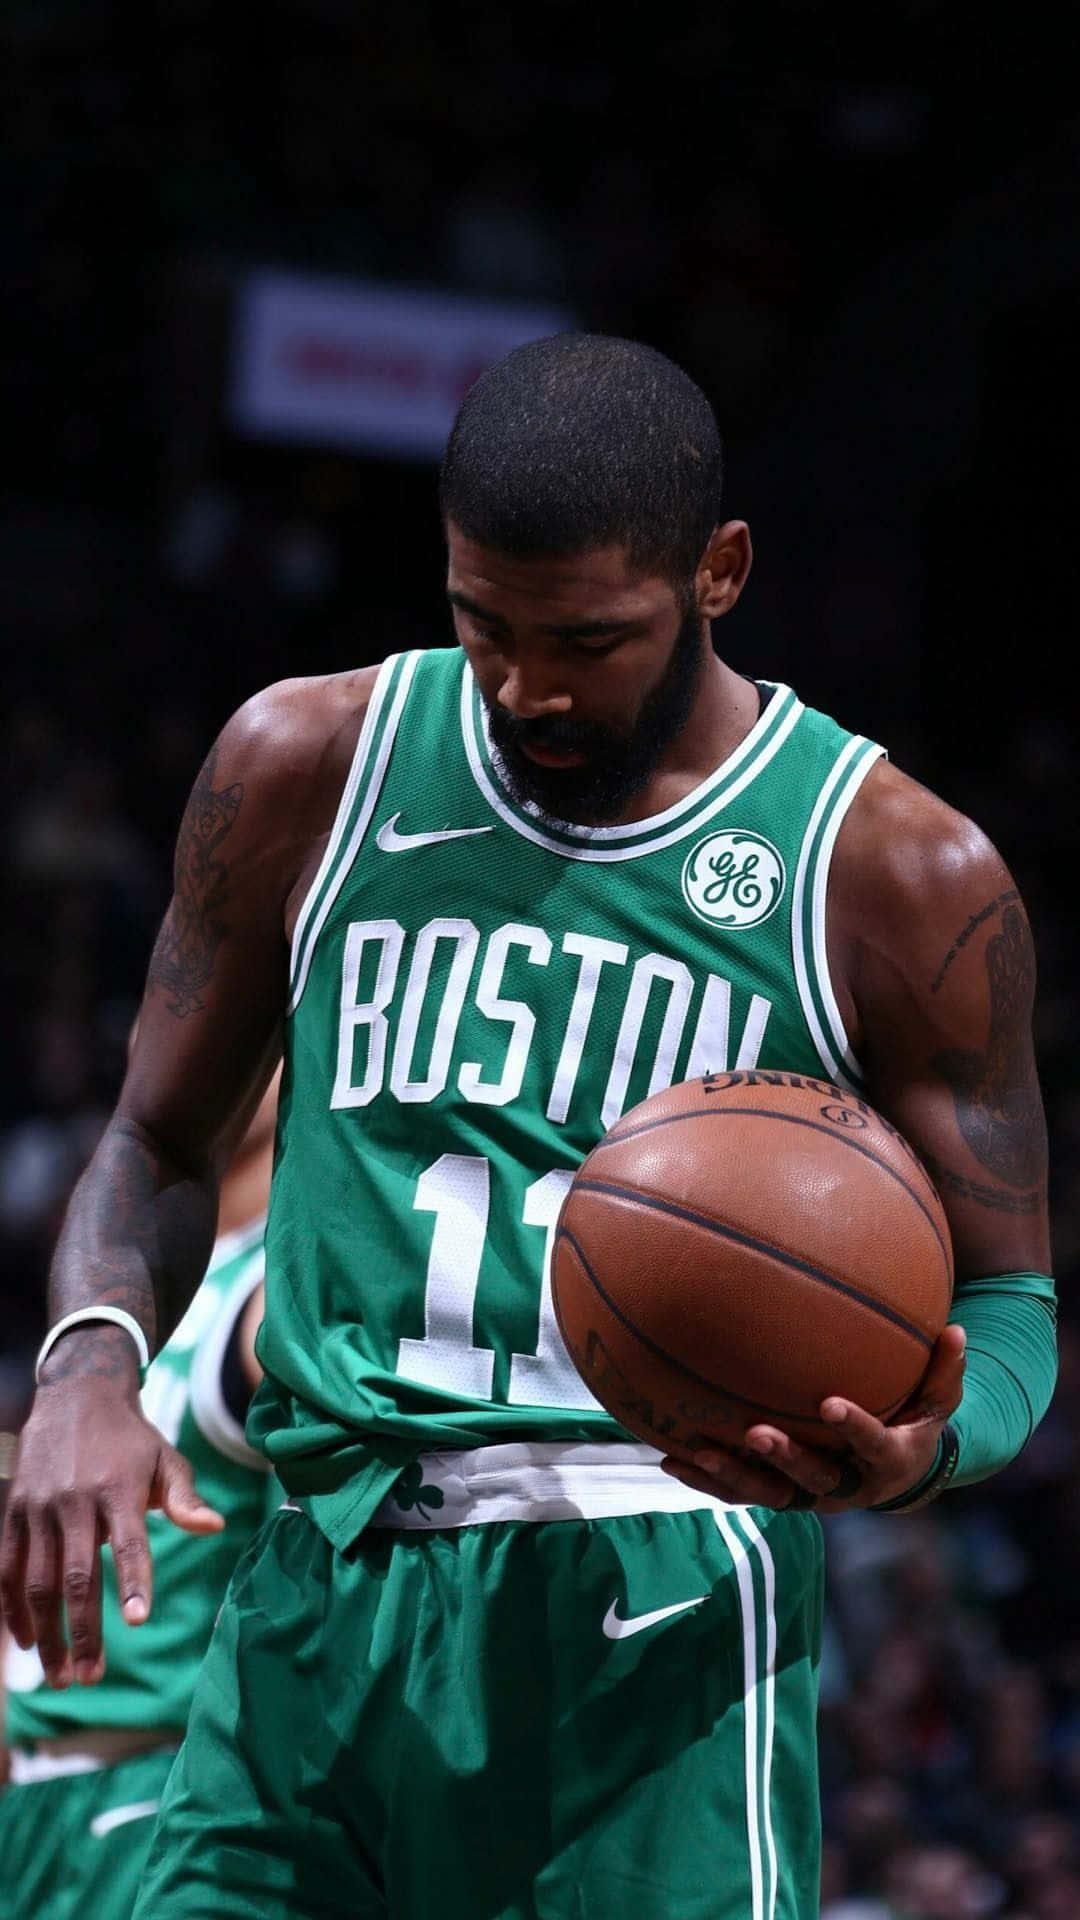 Boston Celtics Player Holding A Basketball Ball Wallpaper